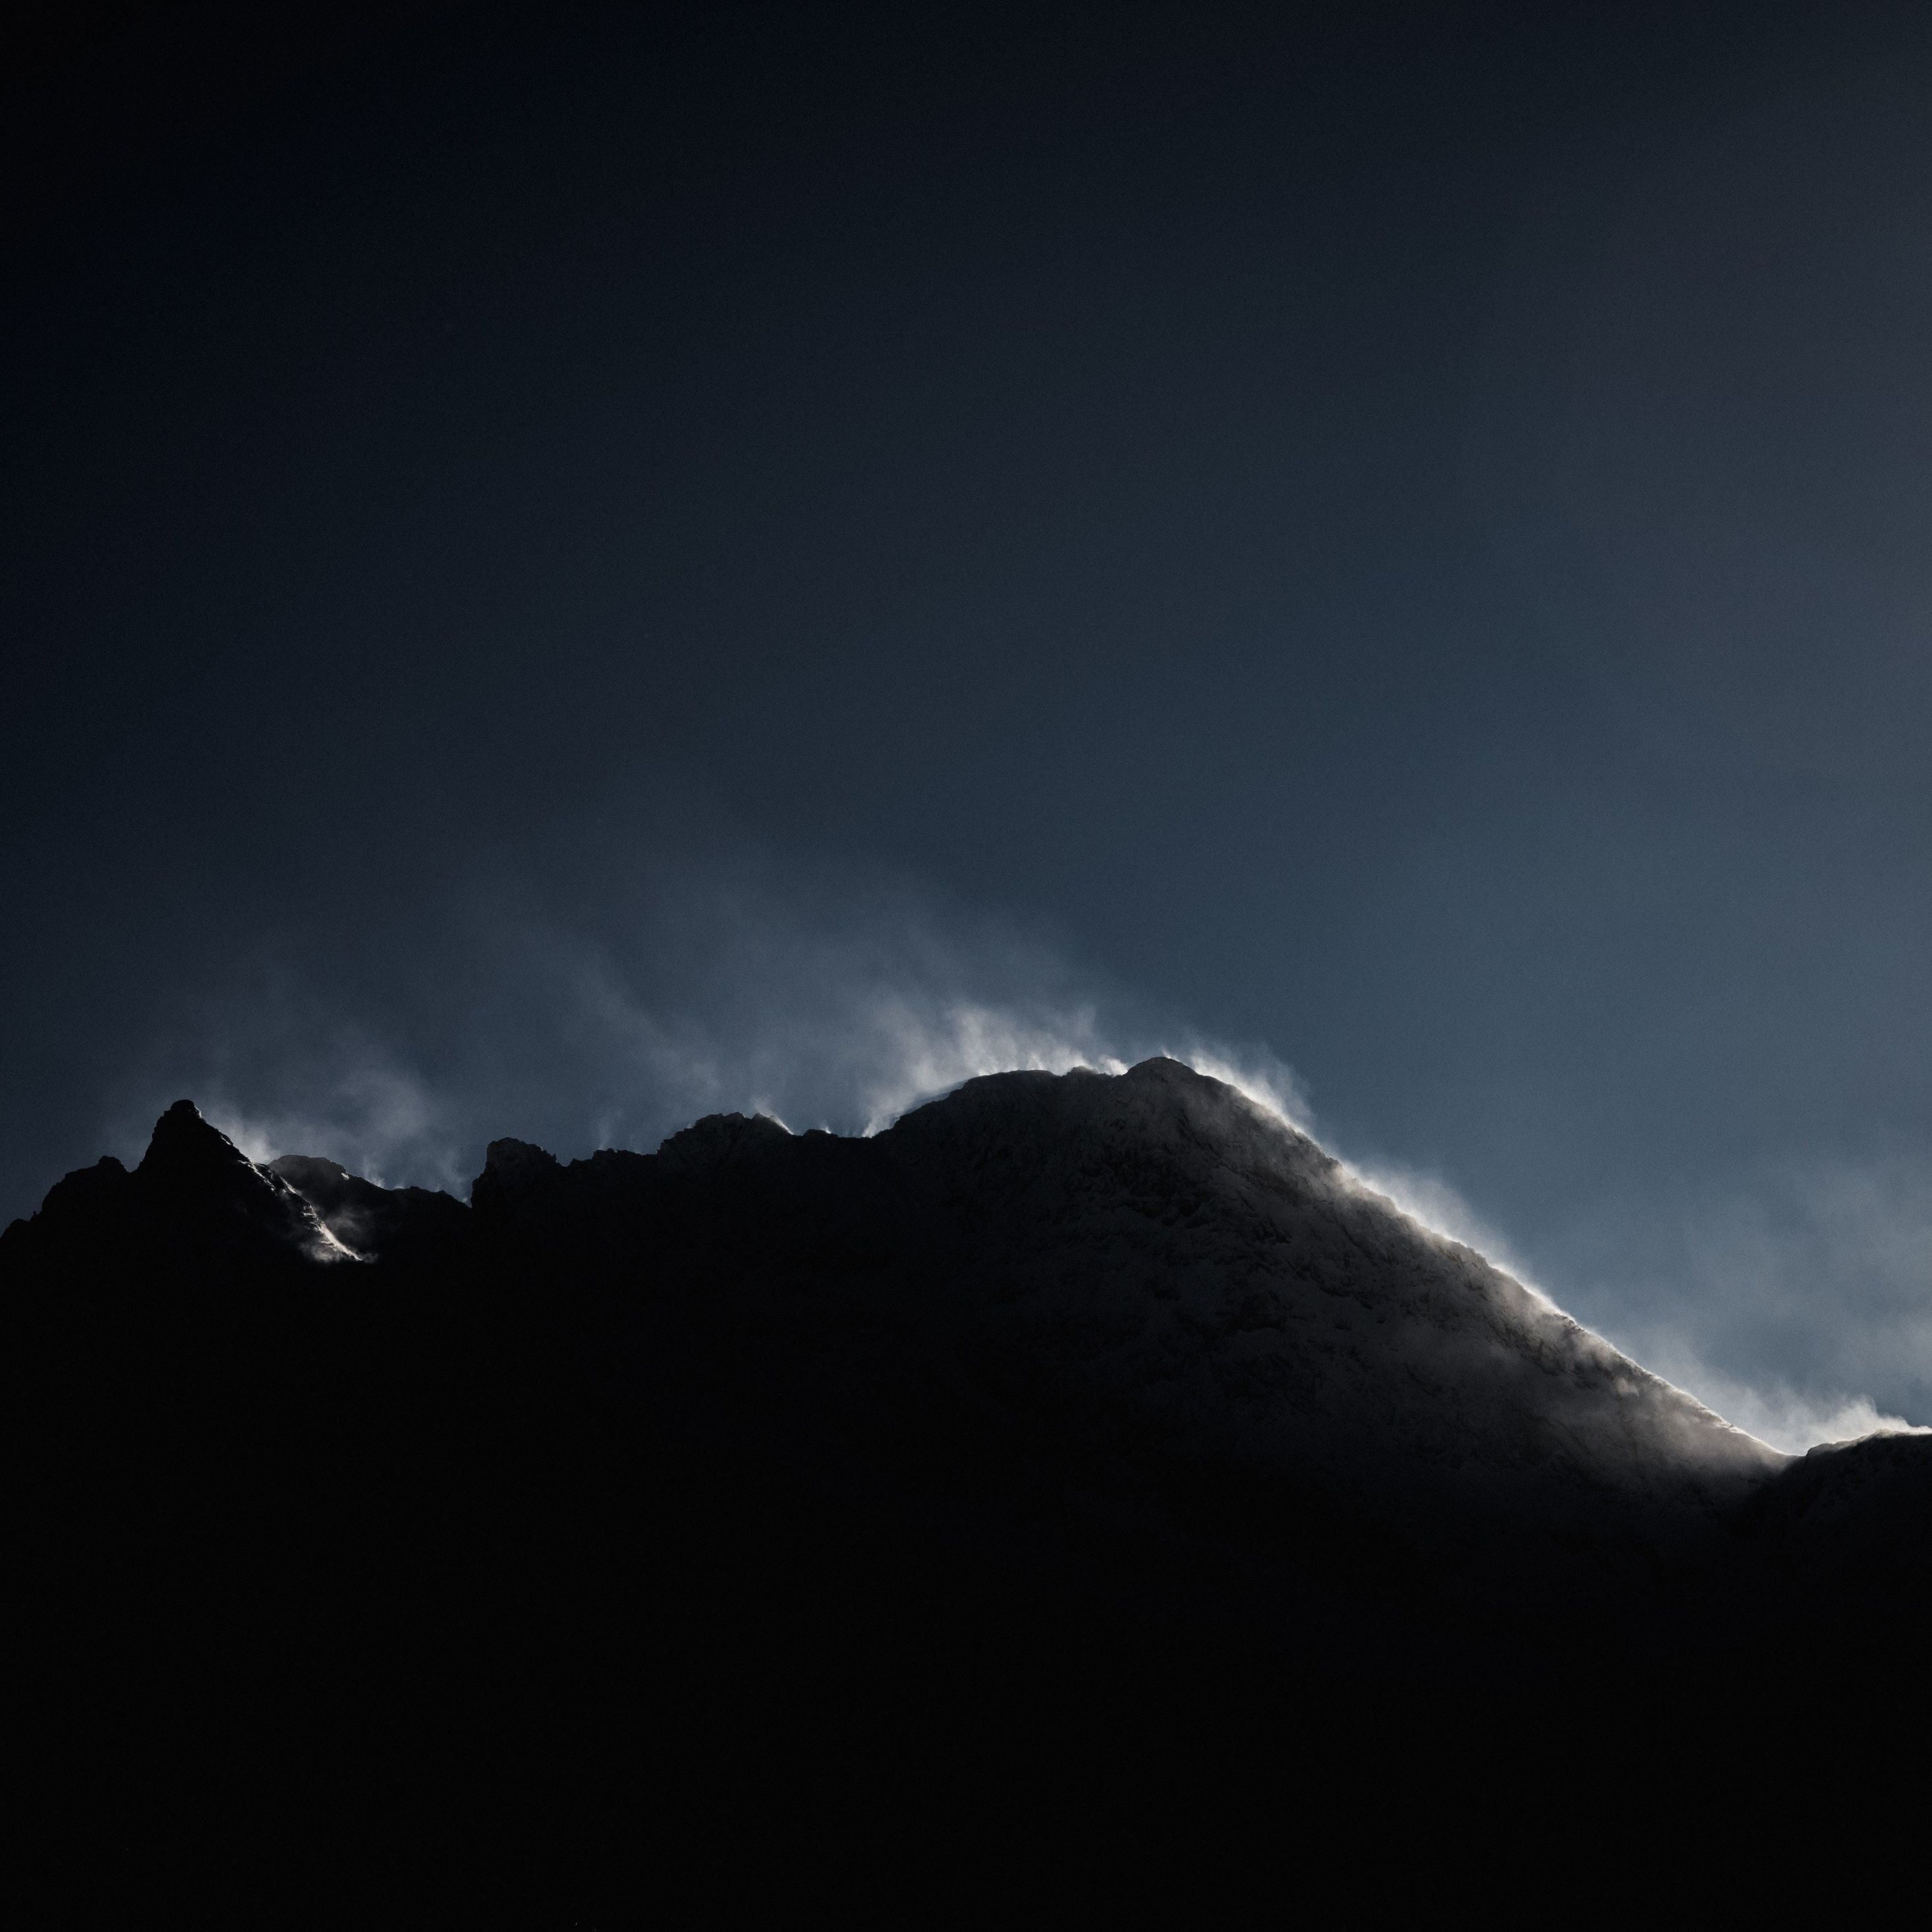 Download 2932x2932 wallpaper dark, mountains, peak, fog, ipad pro retina, 2932x2932 HD image, background, 21133